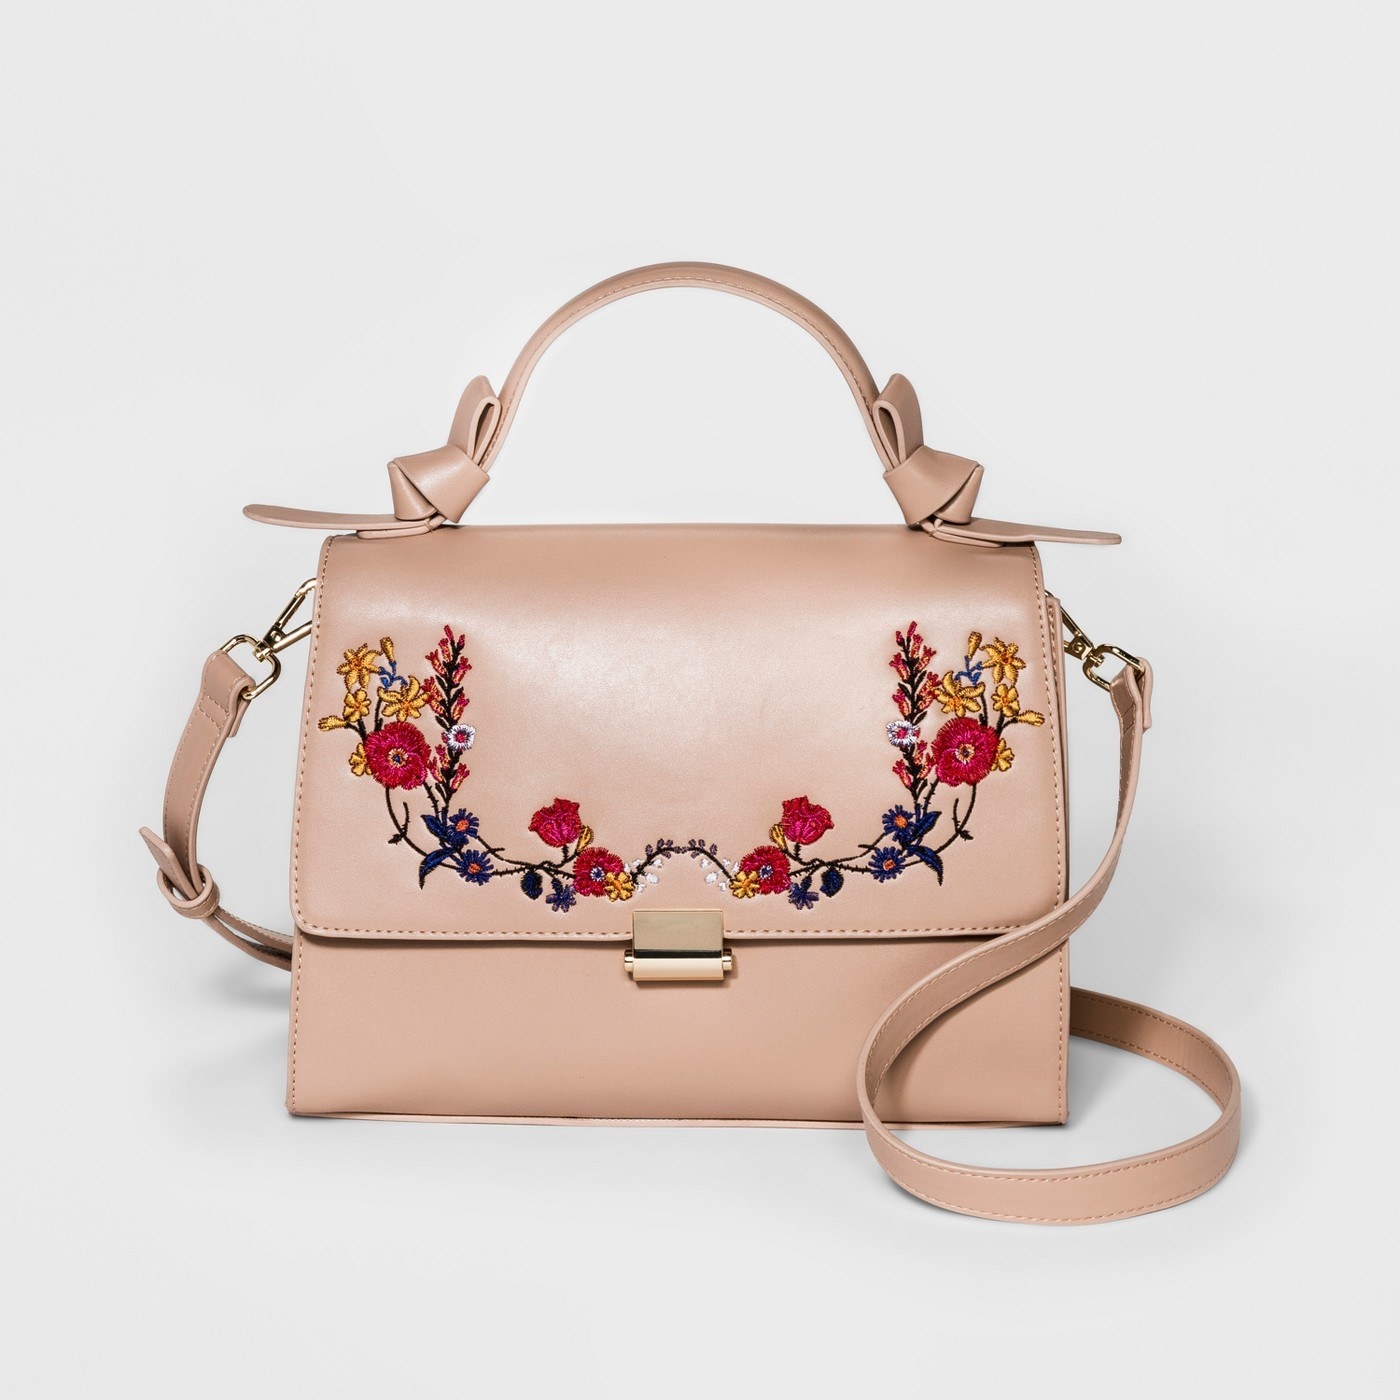 purses and handbags women cute bag| Alibaba.com